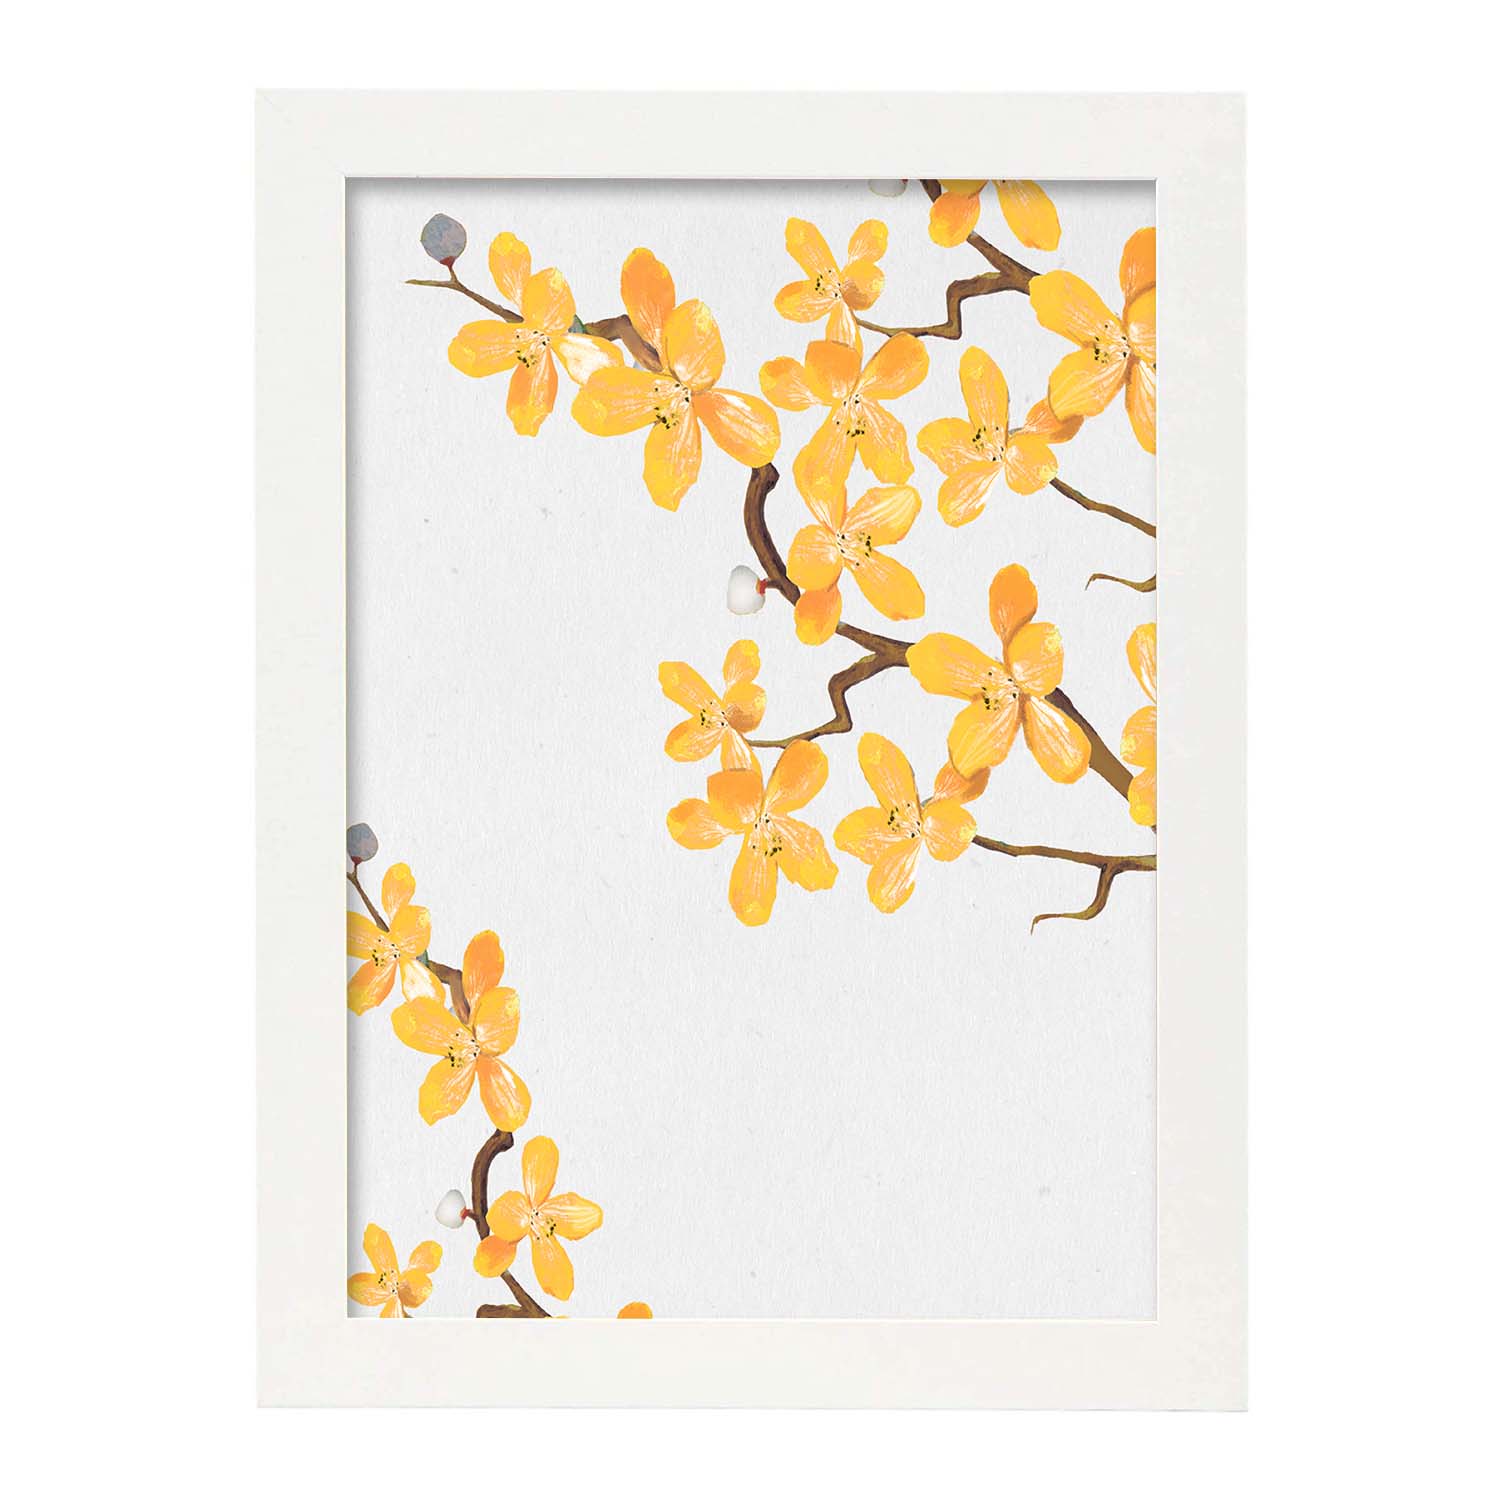 Poster de ramas con estilo de óleo. Lámina Ramas 6, con dibujos pintados de ramas, hojas, y flores.-Artwork-Nacnic-A4-Marco Blanco-Nacnic Estudio SL